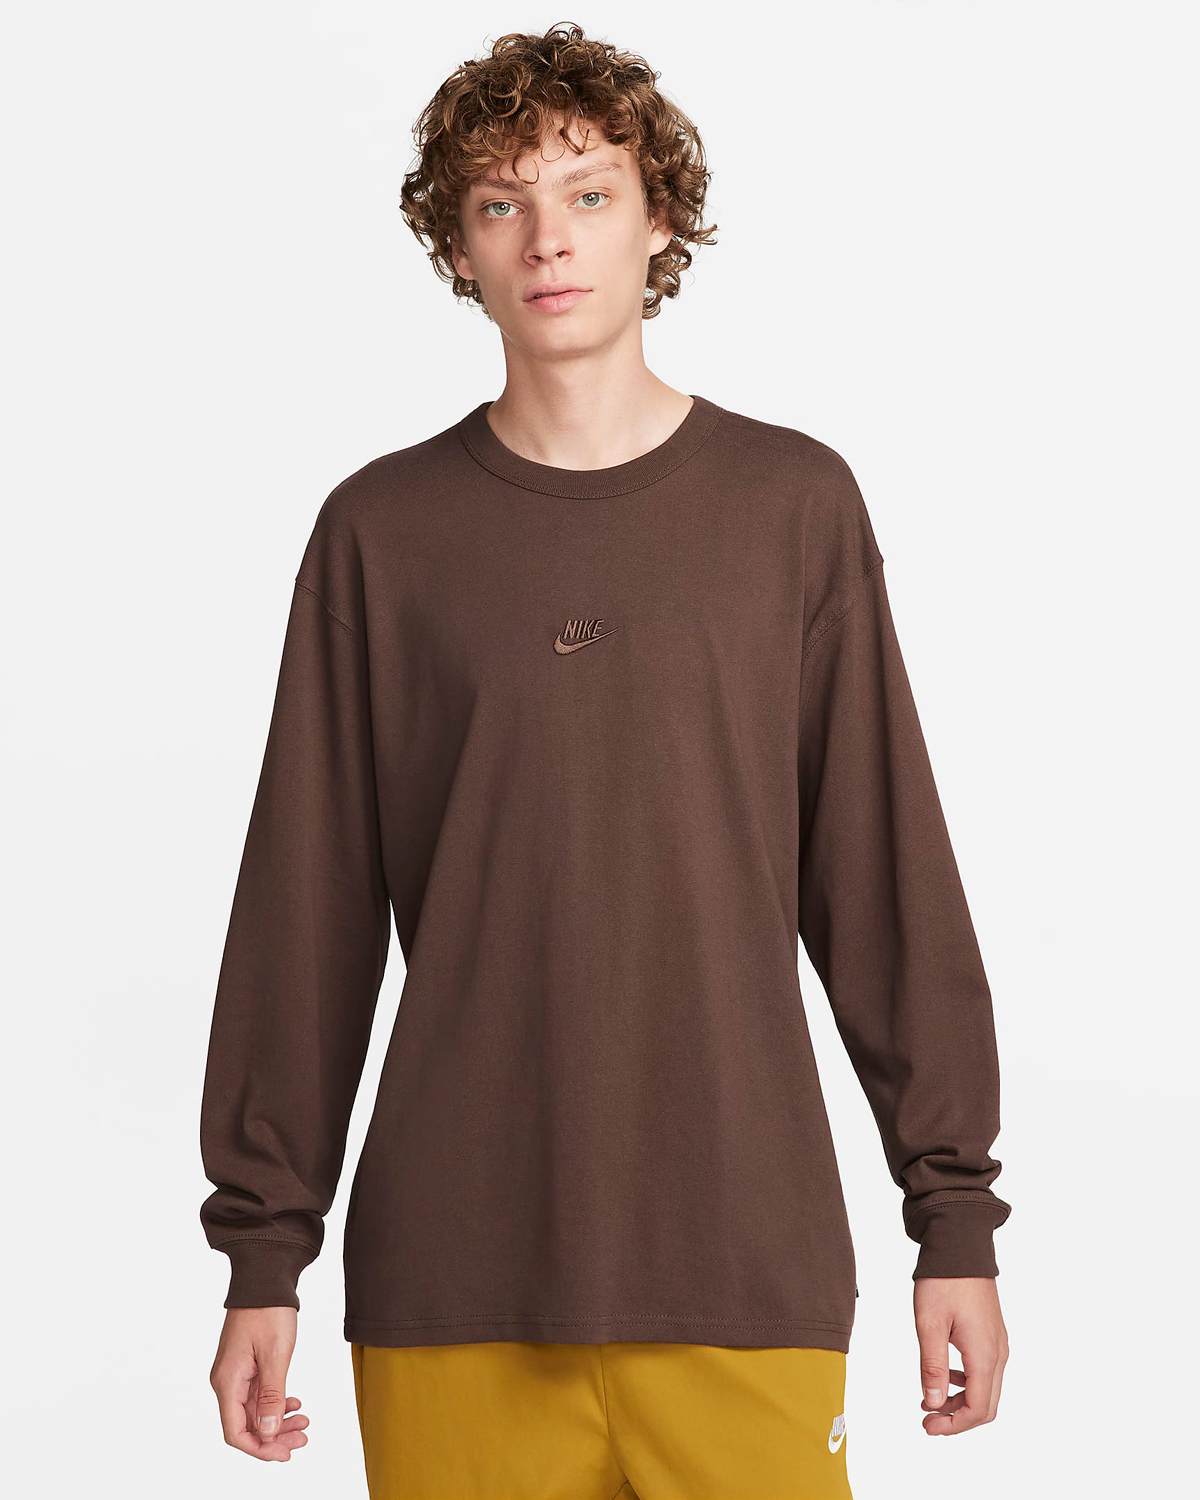 Nike-Sportswear-Premium-Long-Sleeve-T-Shirt-Baroque-Brown